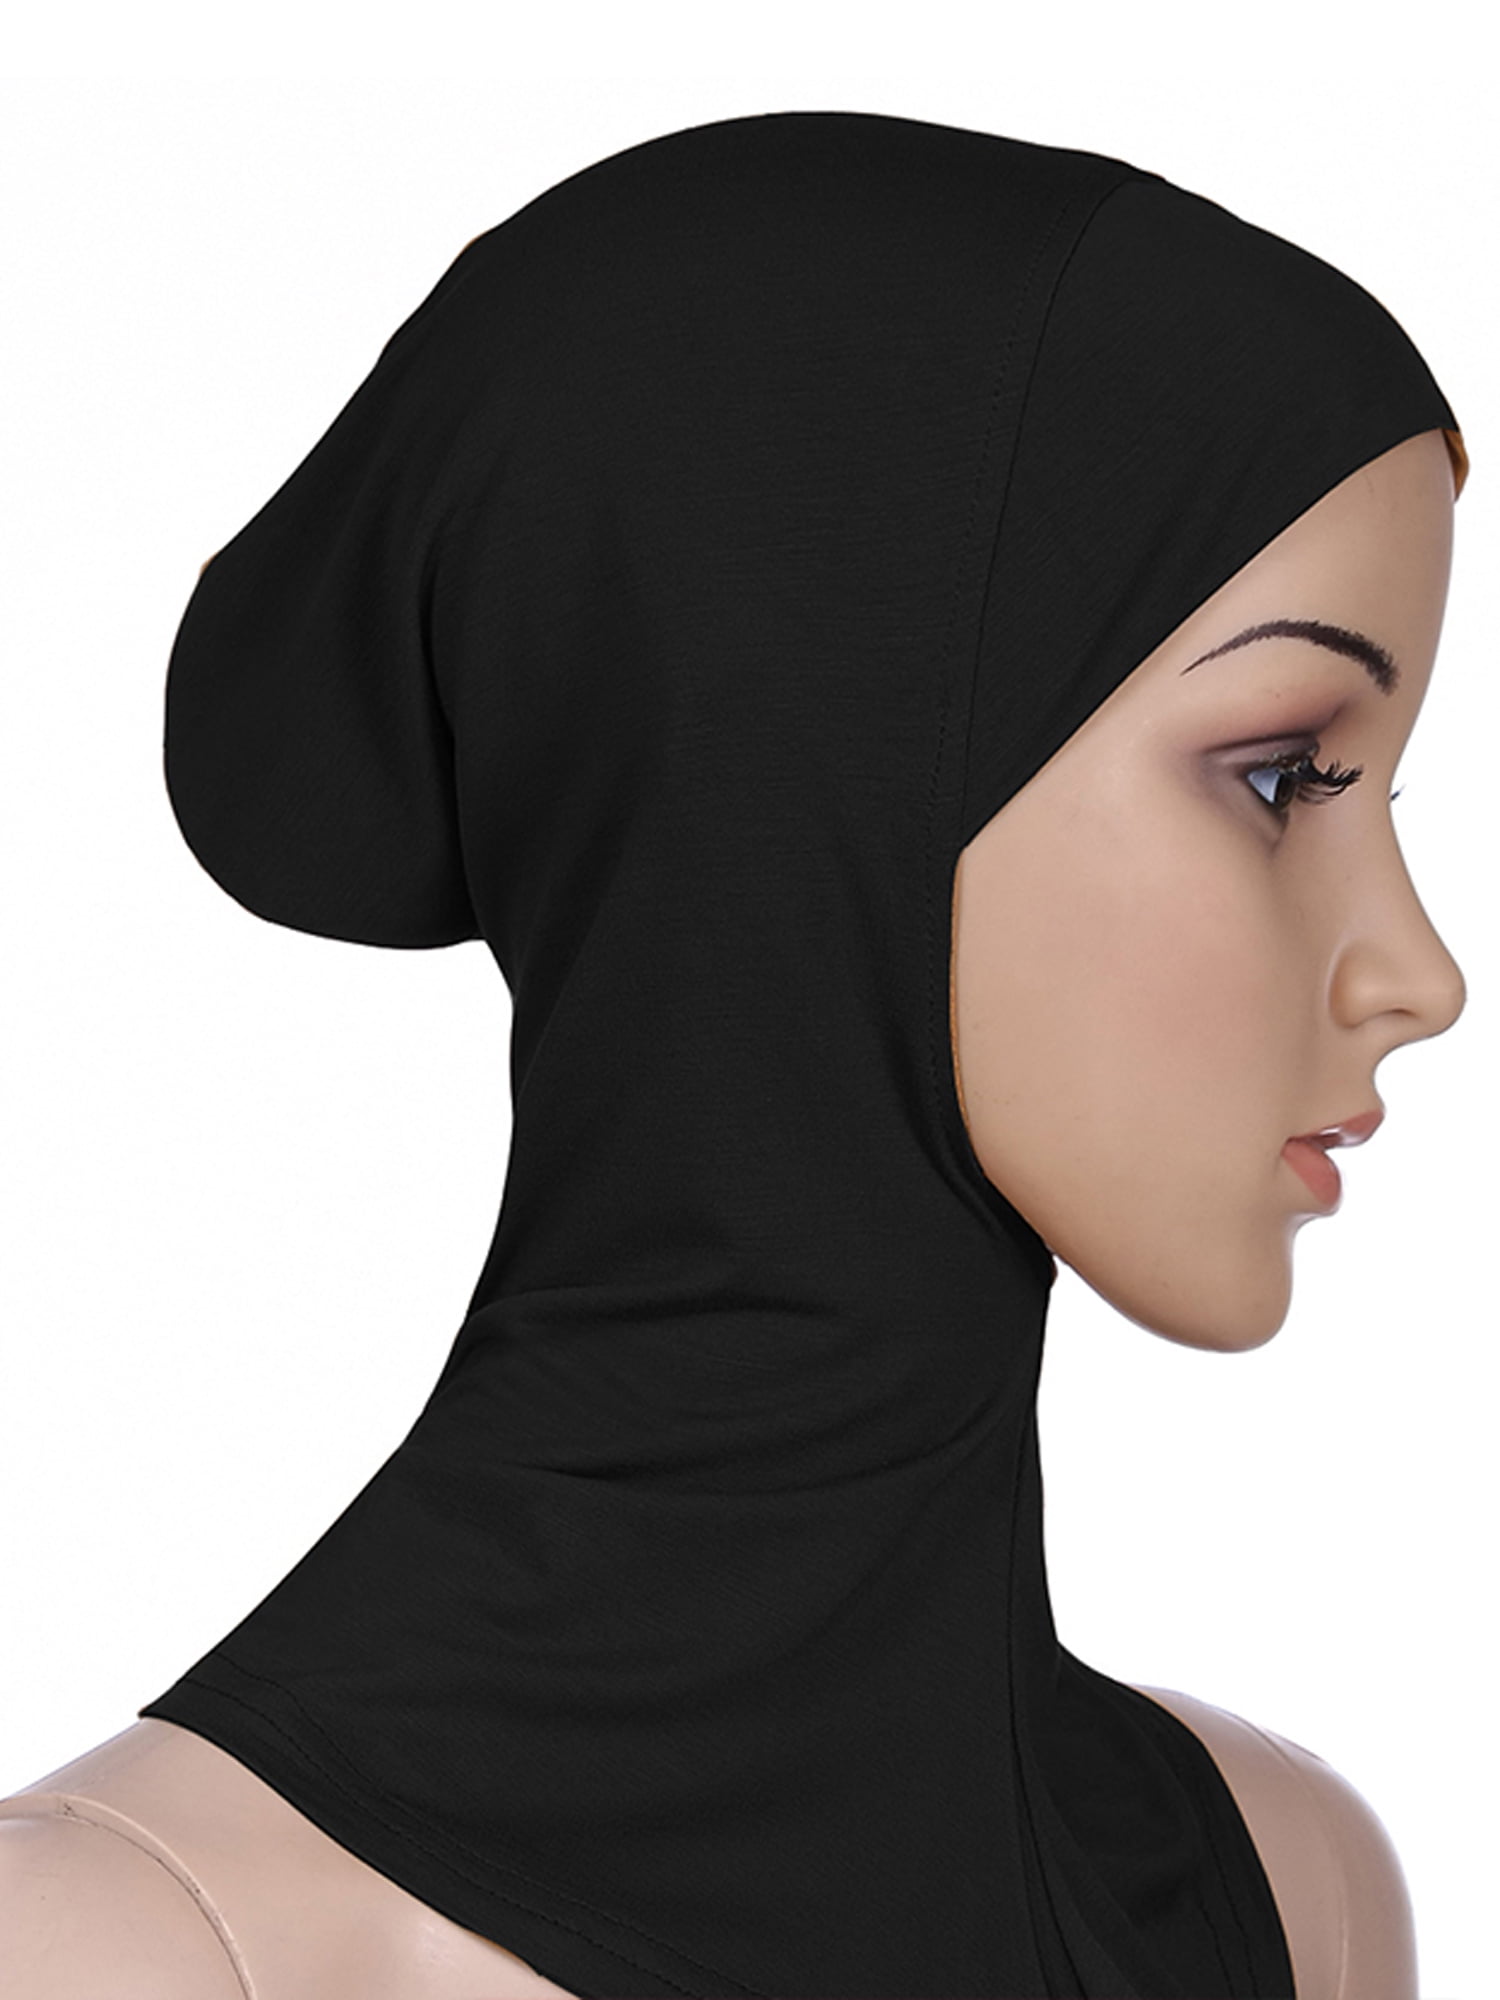 Ladies Under Scarf Hat Cap Bone Bonnet Ninja Hijab Islamic Neck Cover Muslim 